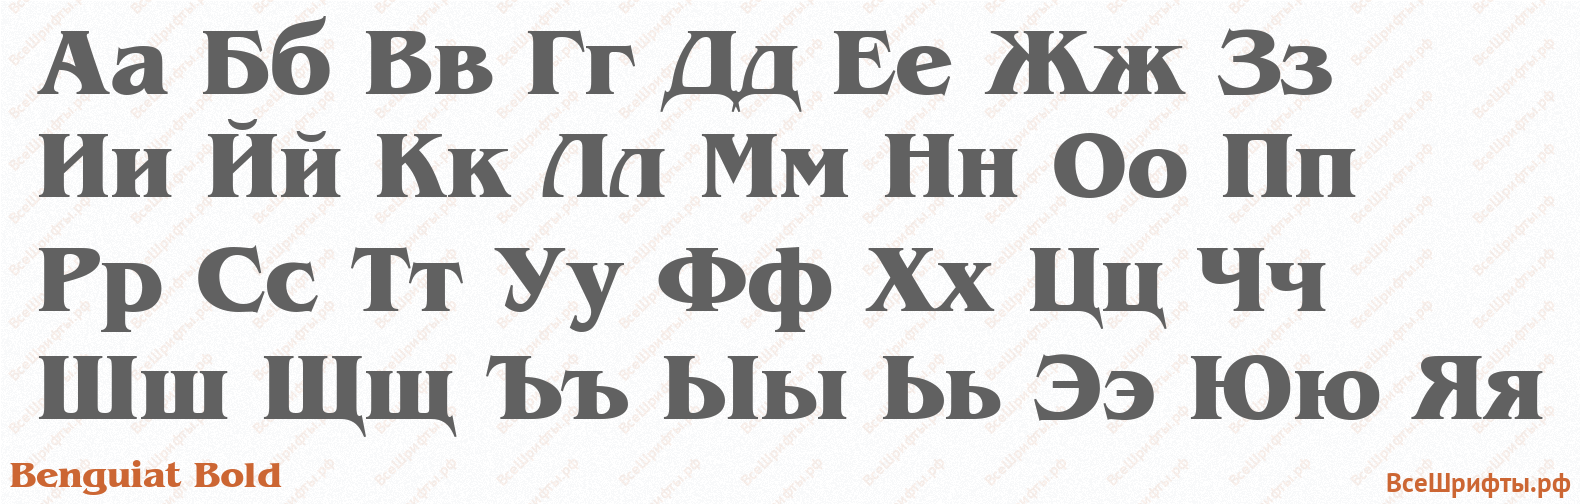 Шрифт Benguiat Bold с русскими буквами